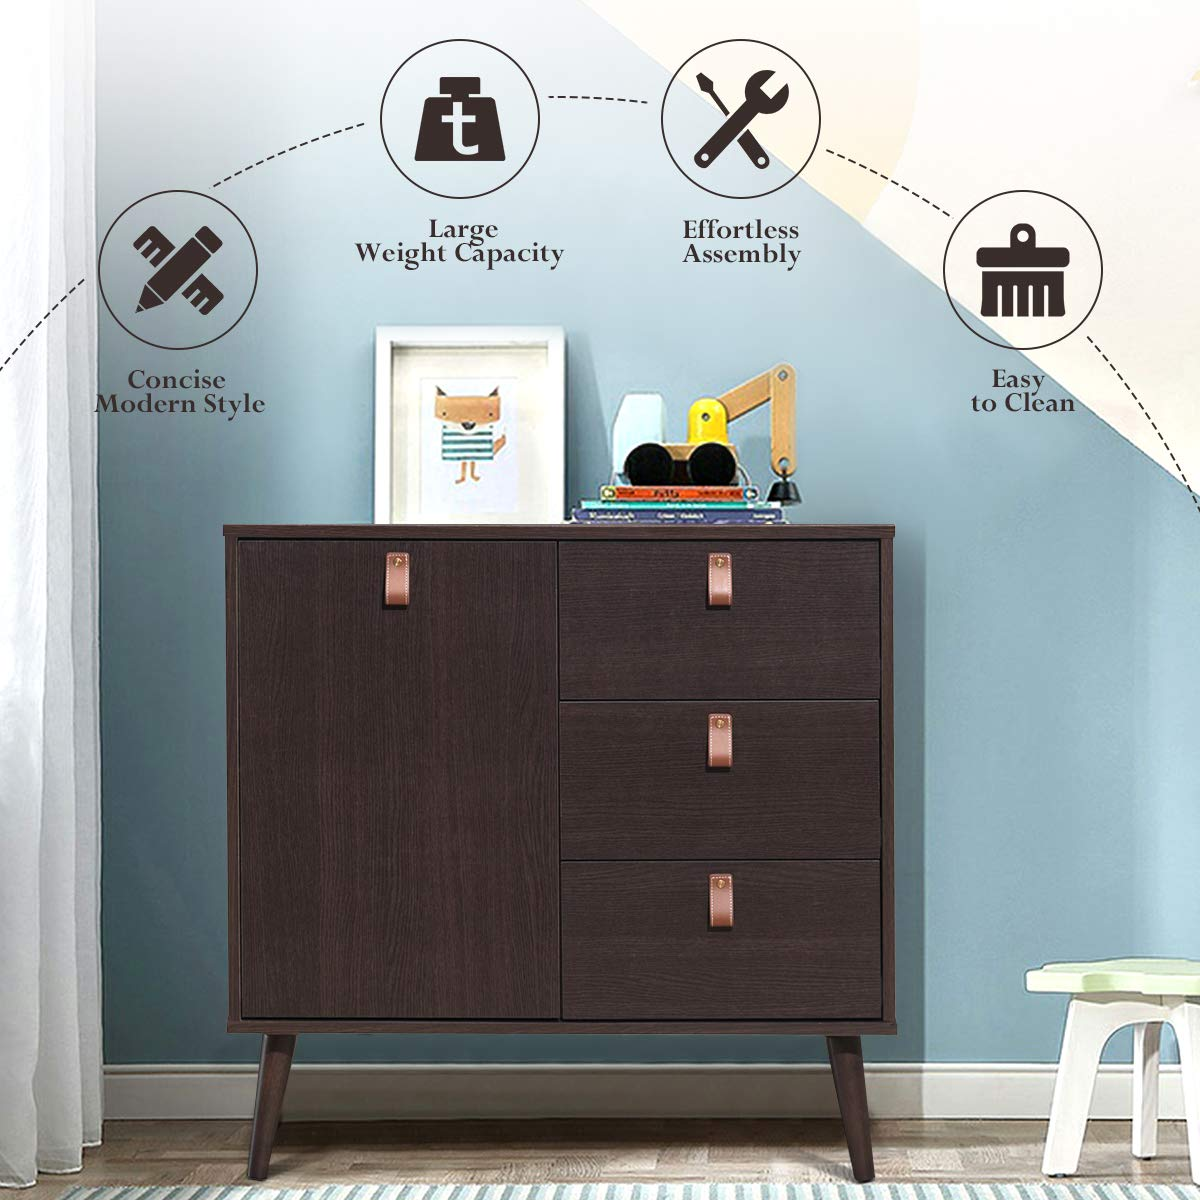 Giantex Sideboard Storage Cabinet with Doors and Adjustable Shelf (Dark Brown)